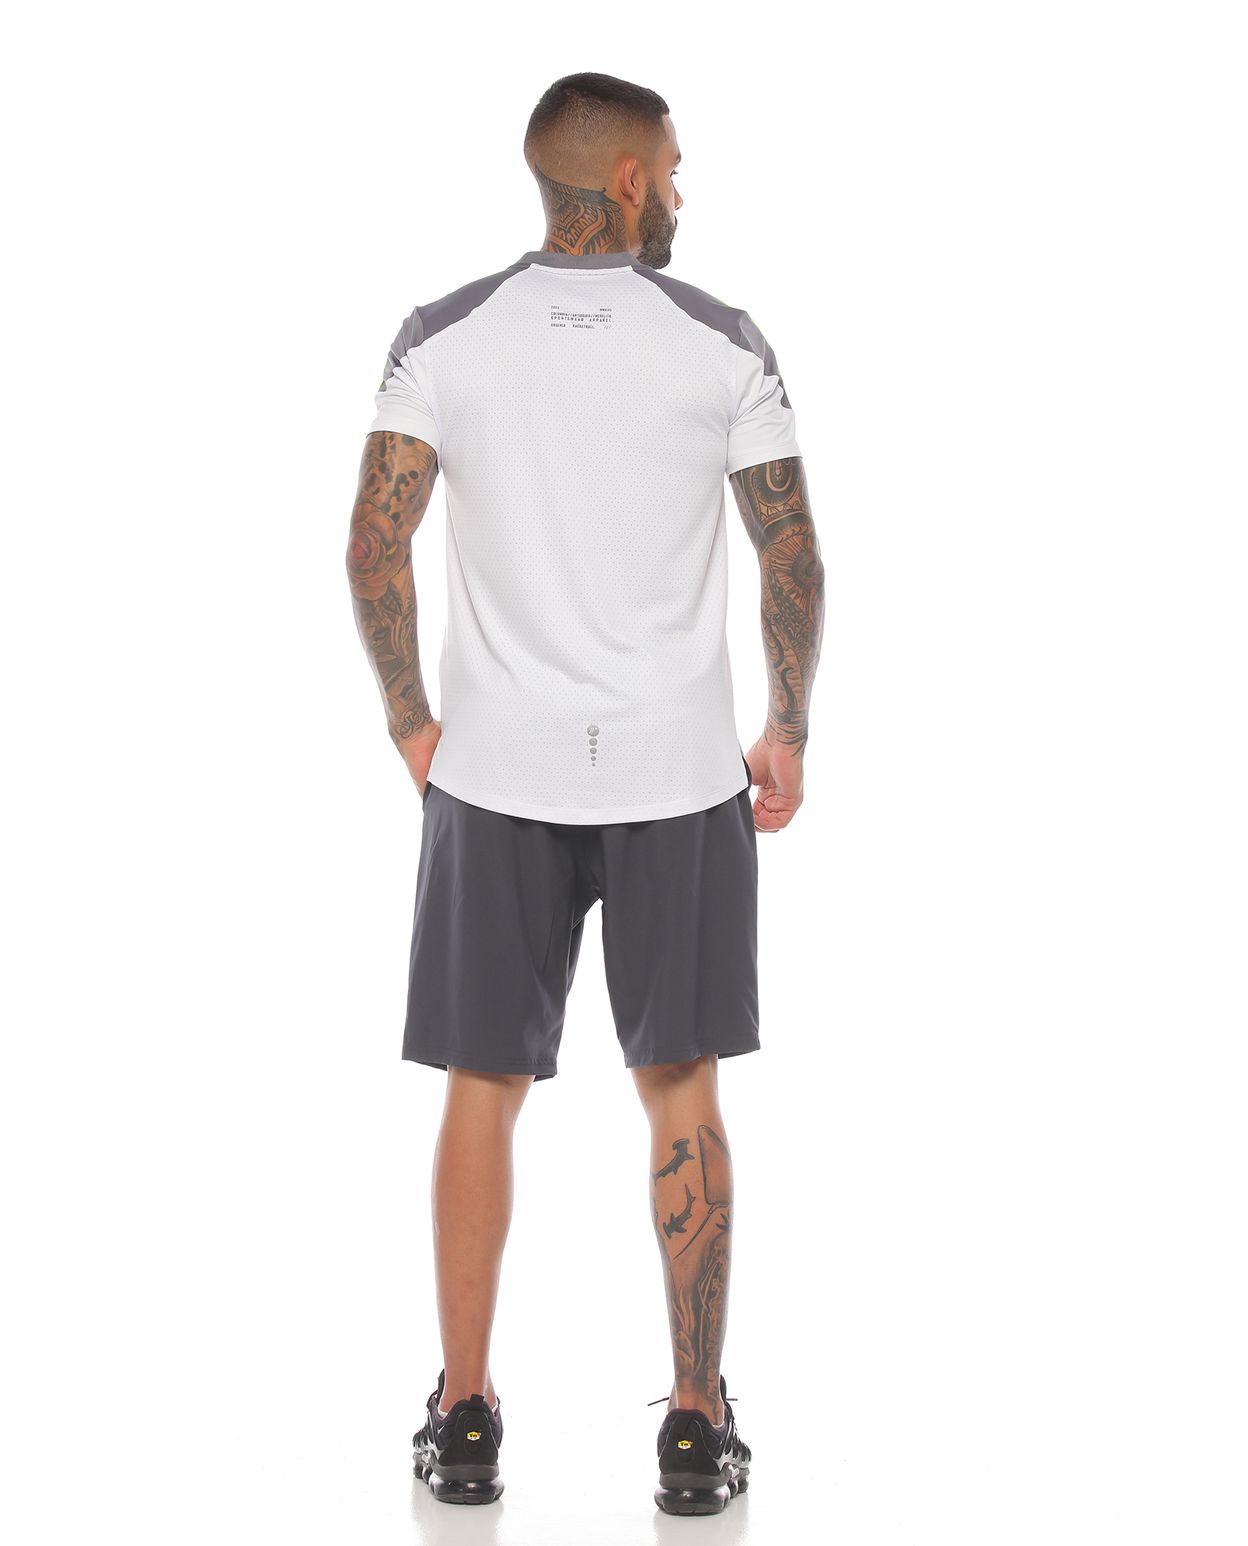 modelo con pantaloneta deportiva color gris y camiseta deportiva manga corta blanca para hombre parte trasera